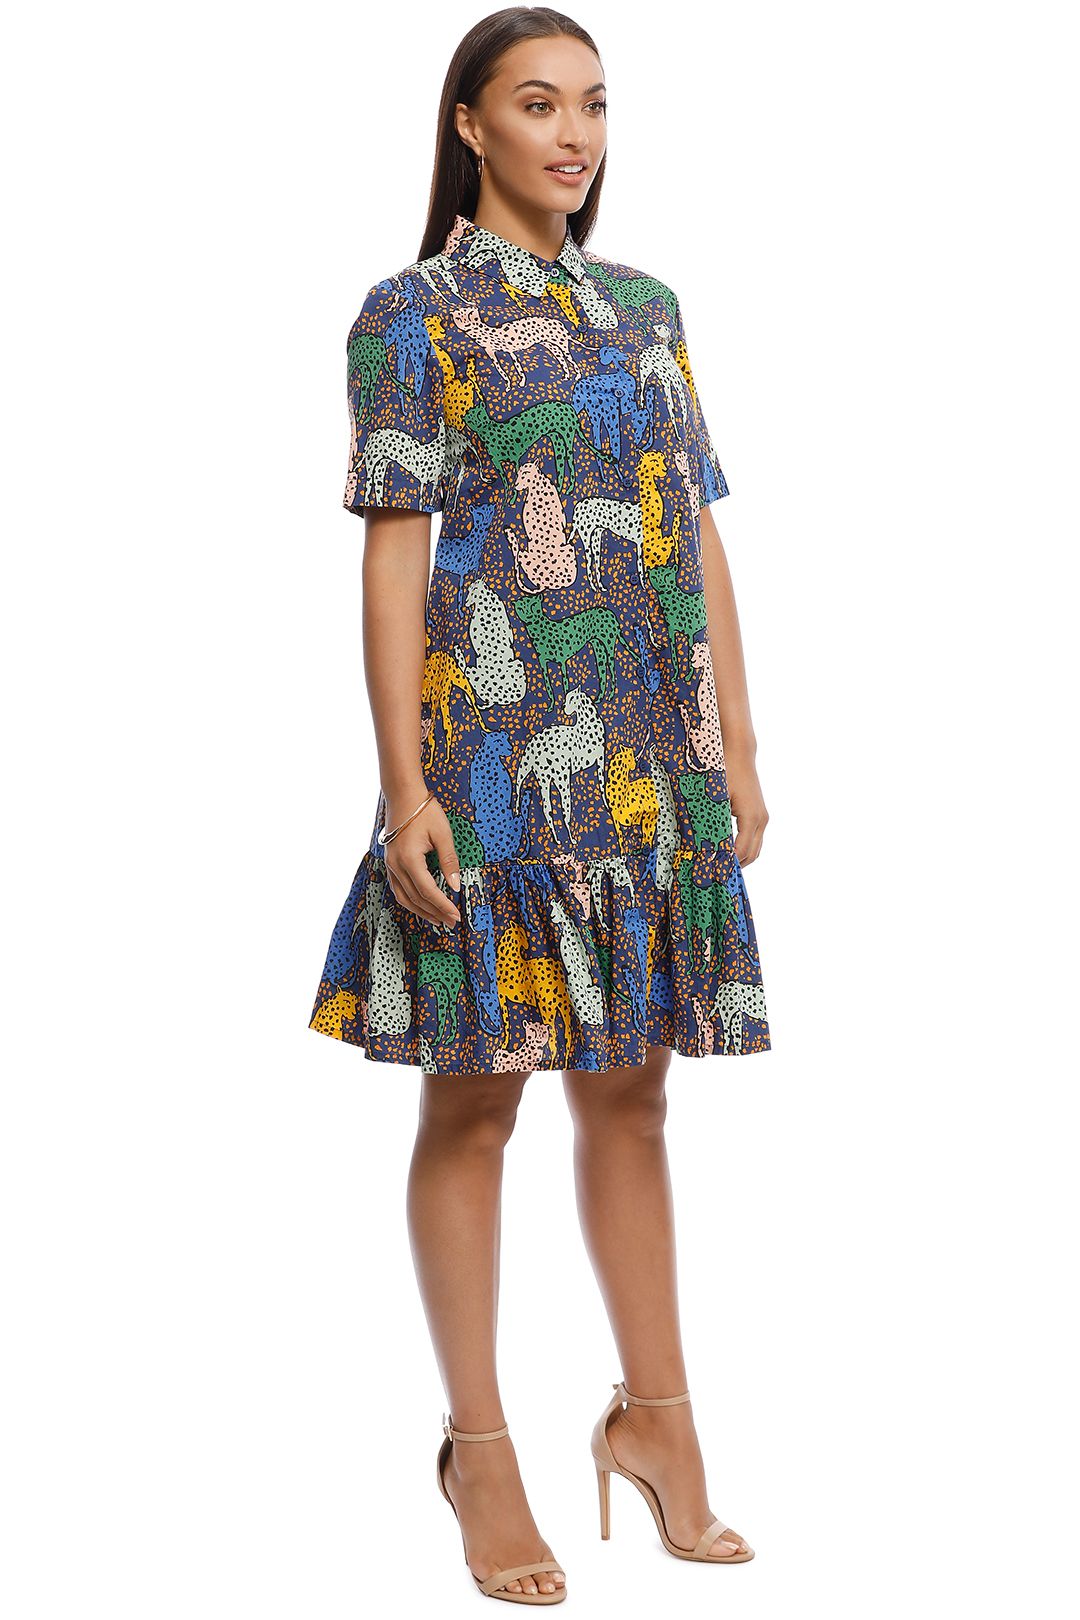 Gorman - Cheetah Print Dress - Multi - Side